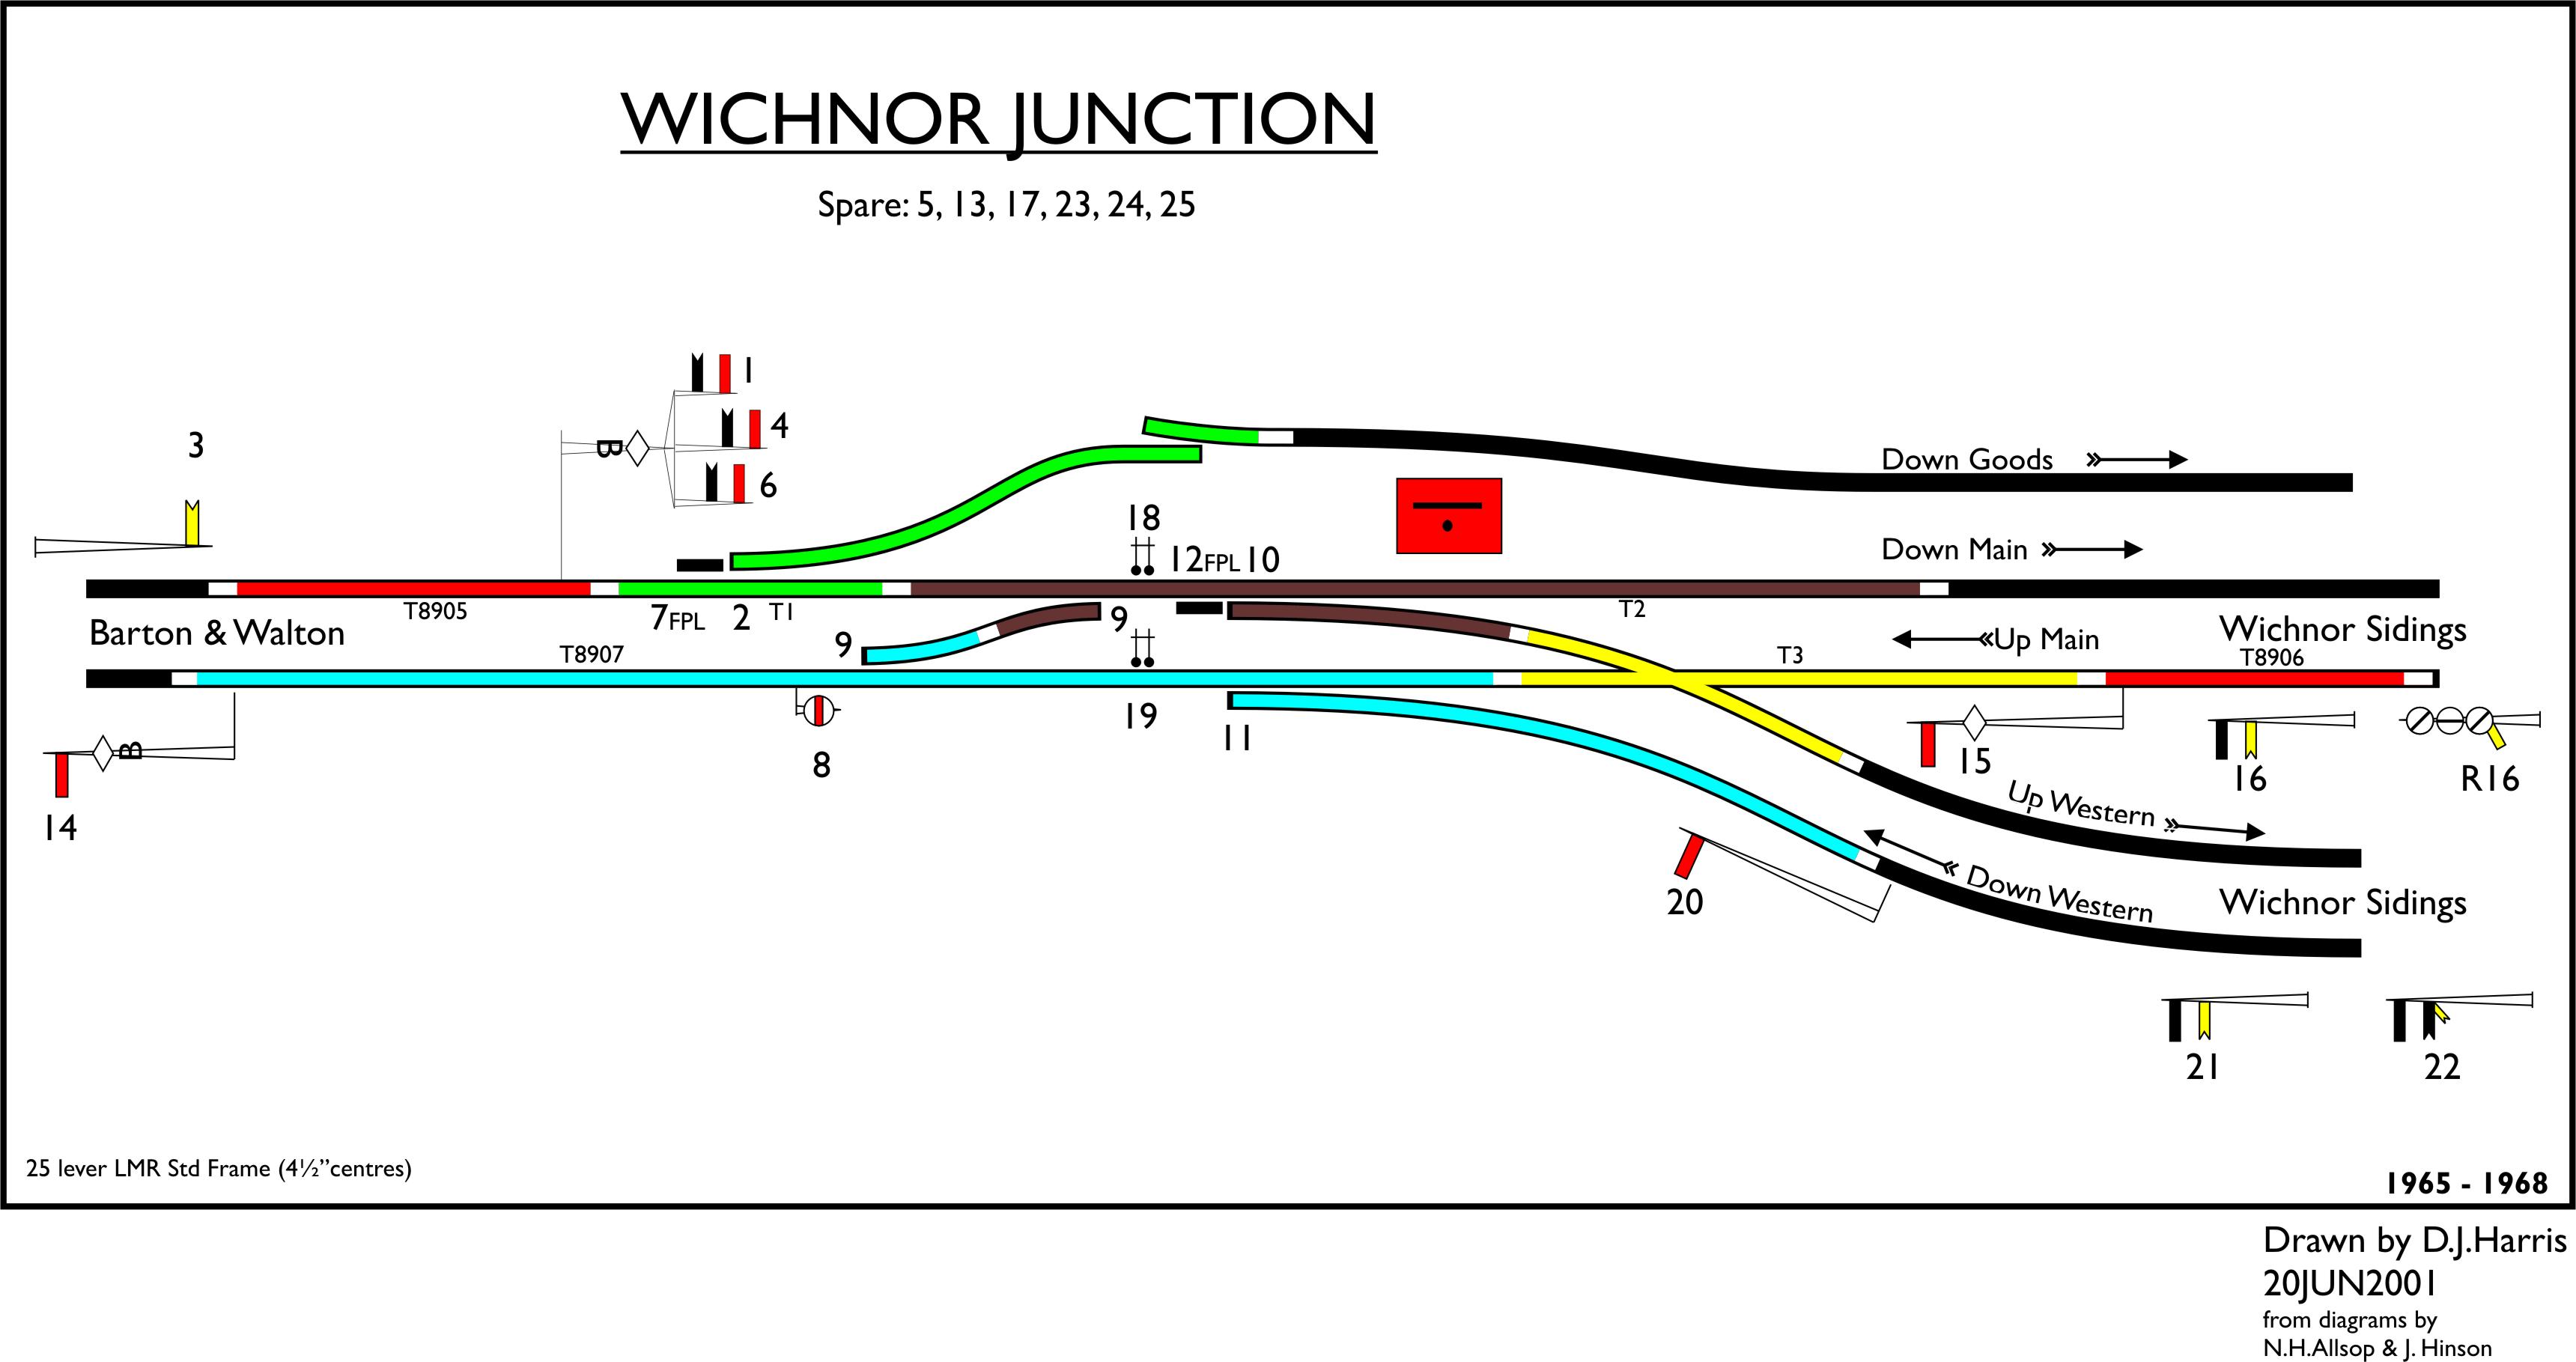 1965 diagram of Wichnor Junction